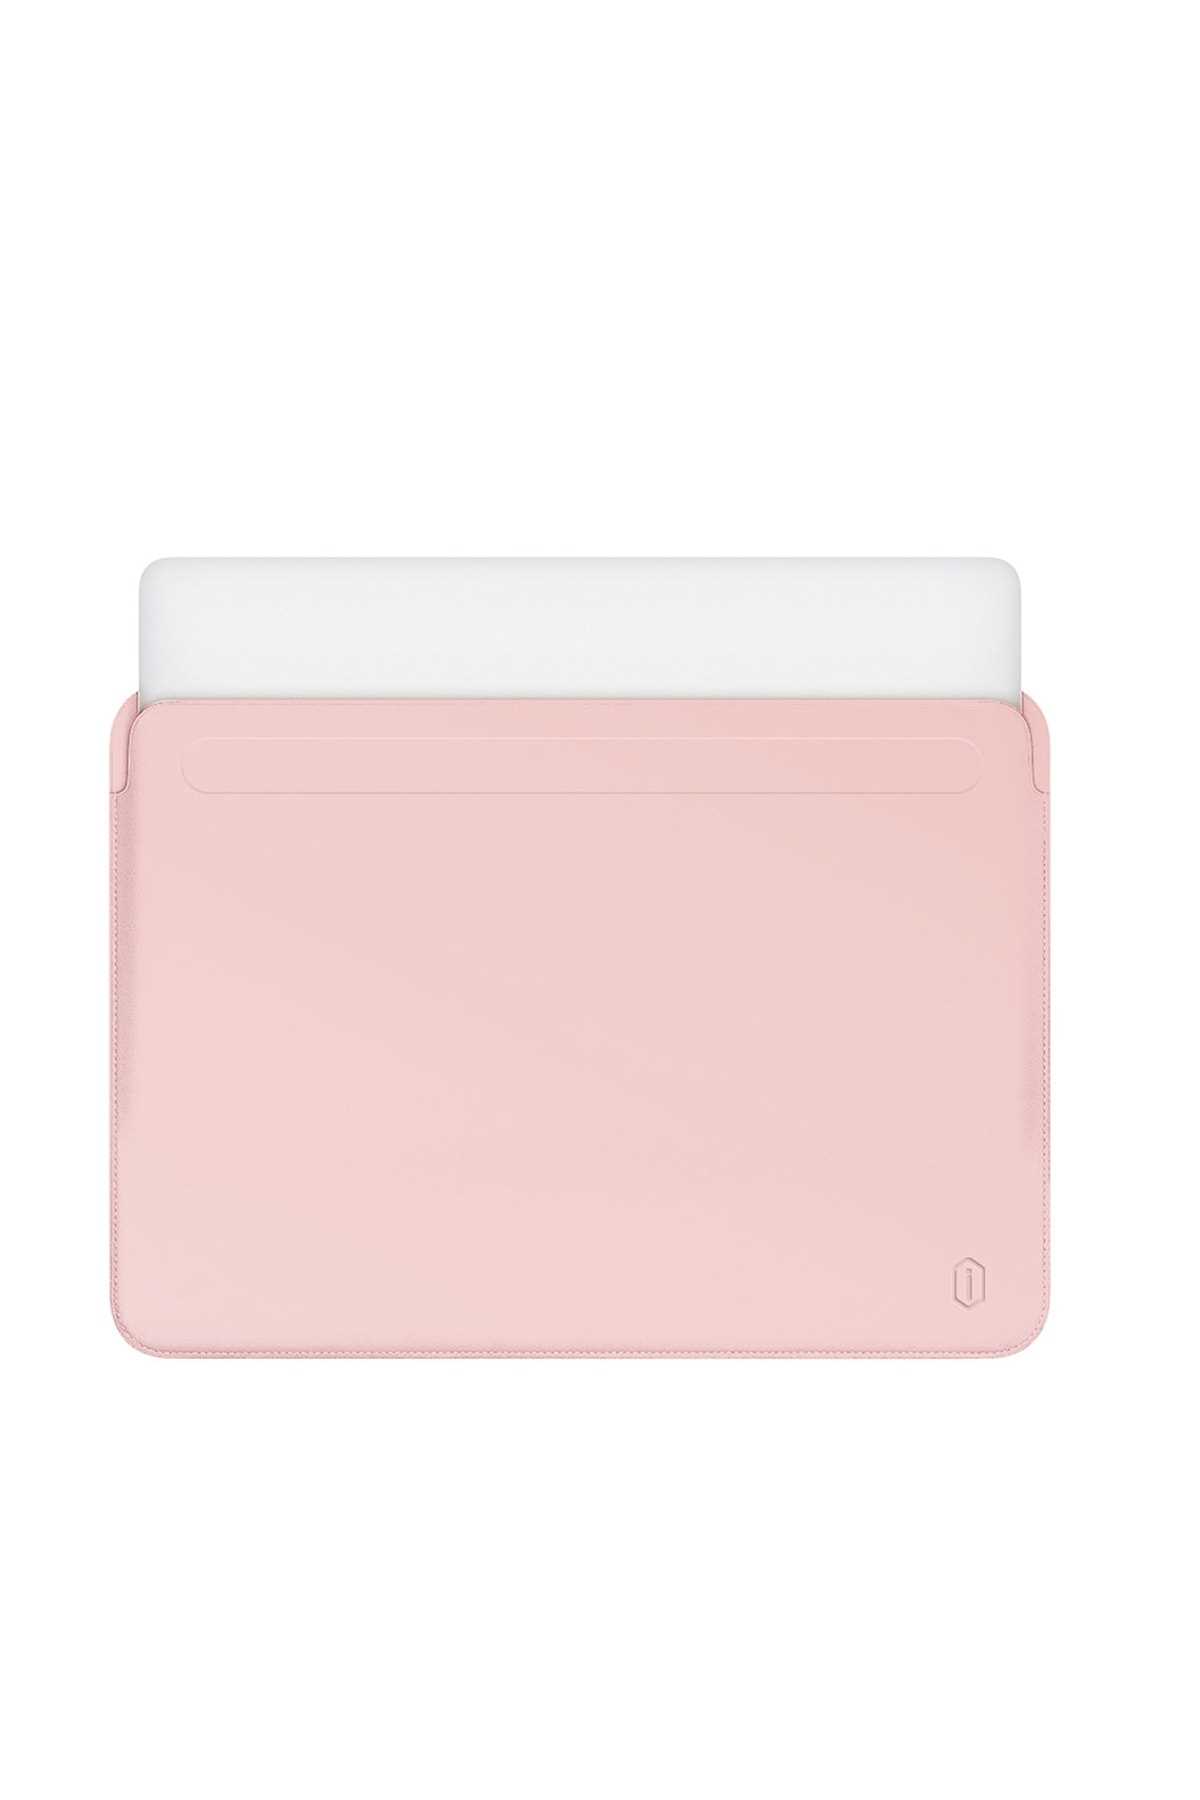 کیف لپ تاپ چرم طبیعی طرح جدید برند WIWU رنگ صورتی ty47811290